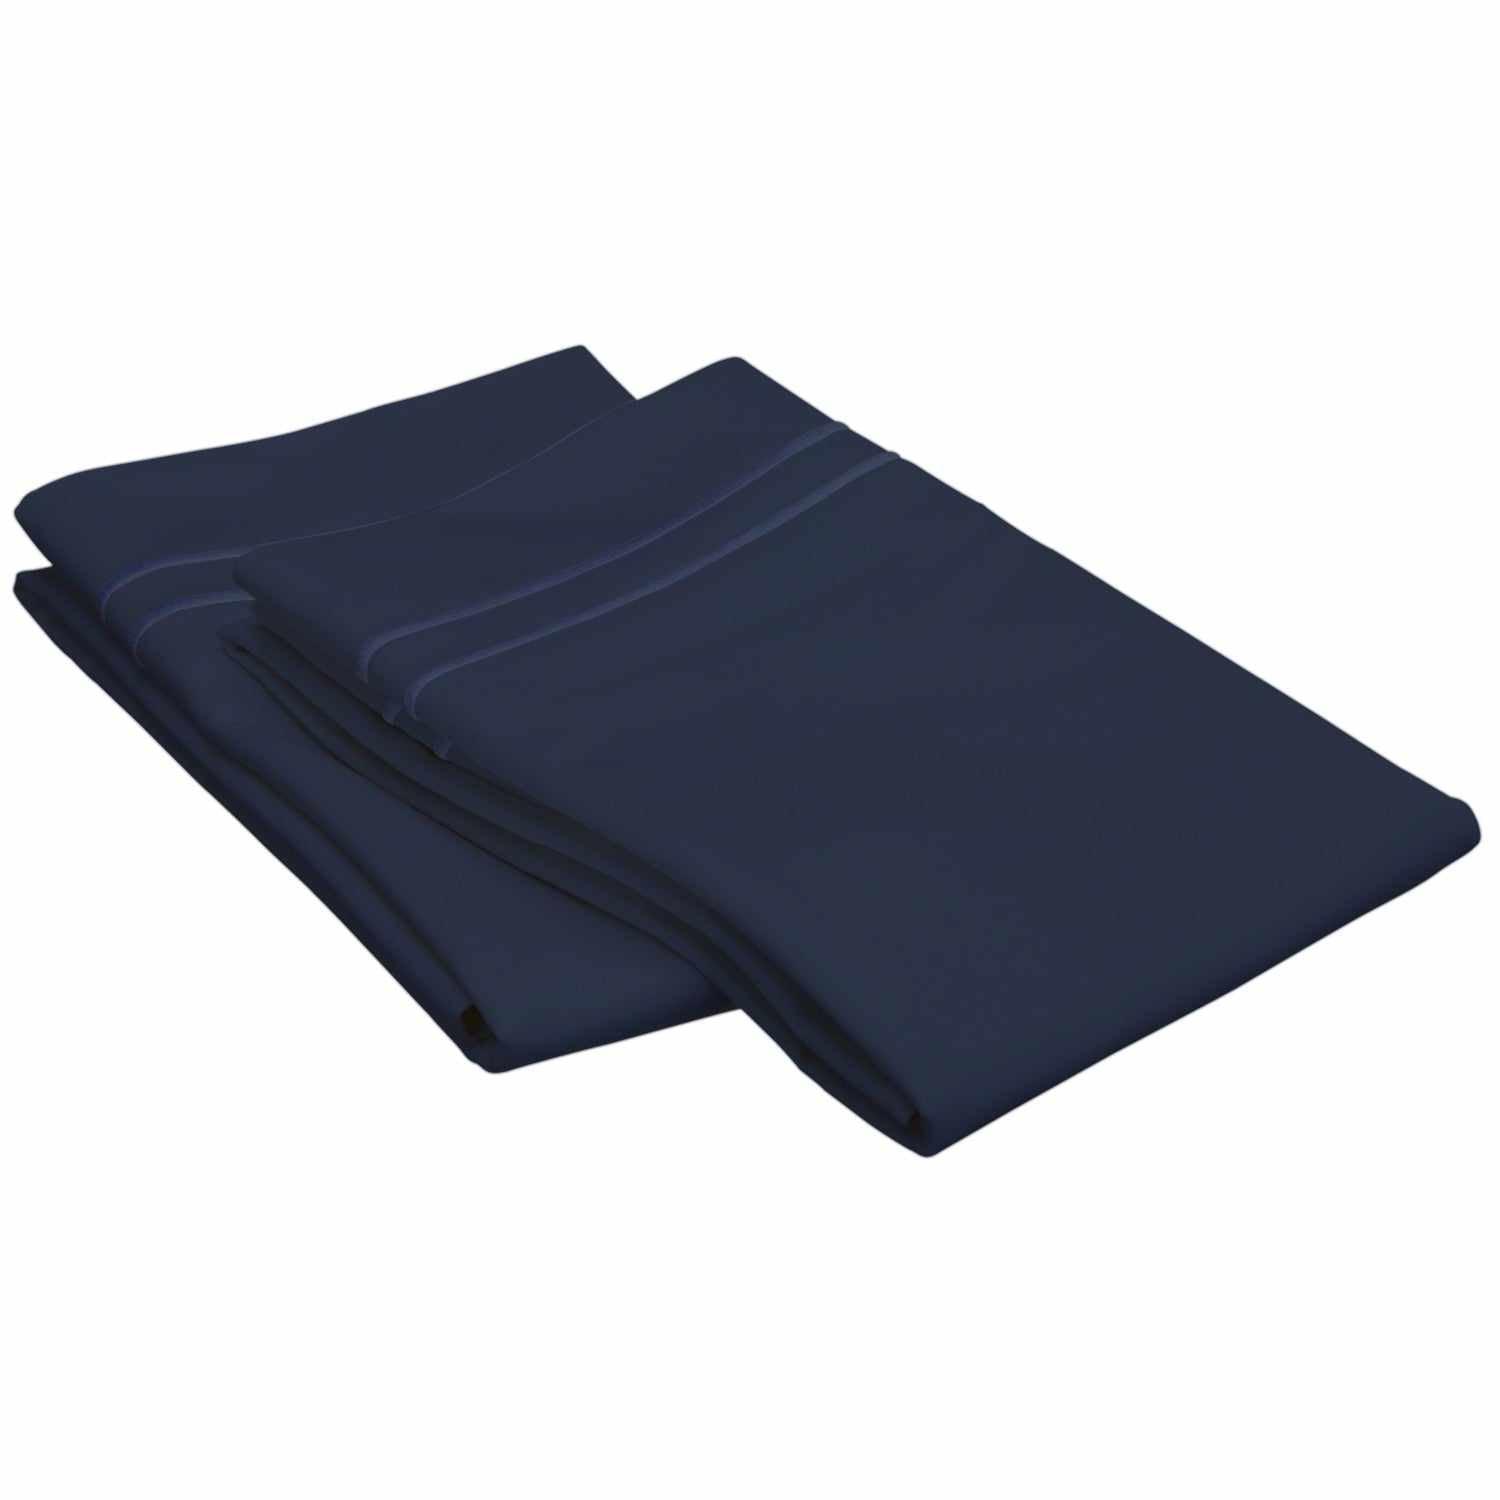 2 Embroidered Line Egyptian Cotton 2-Piece Pillowcase Set - Navy Blue